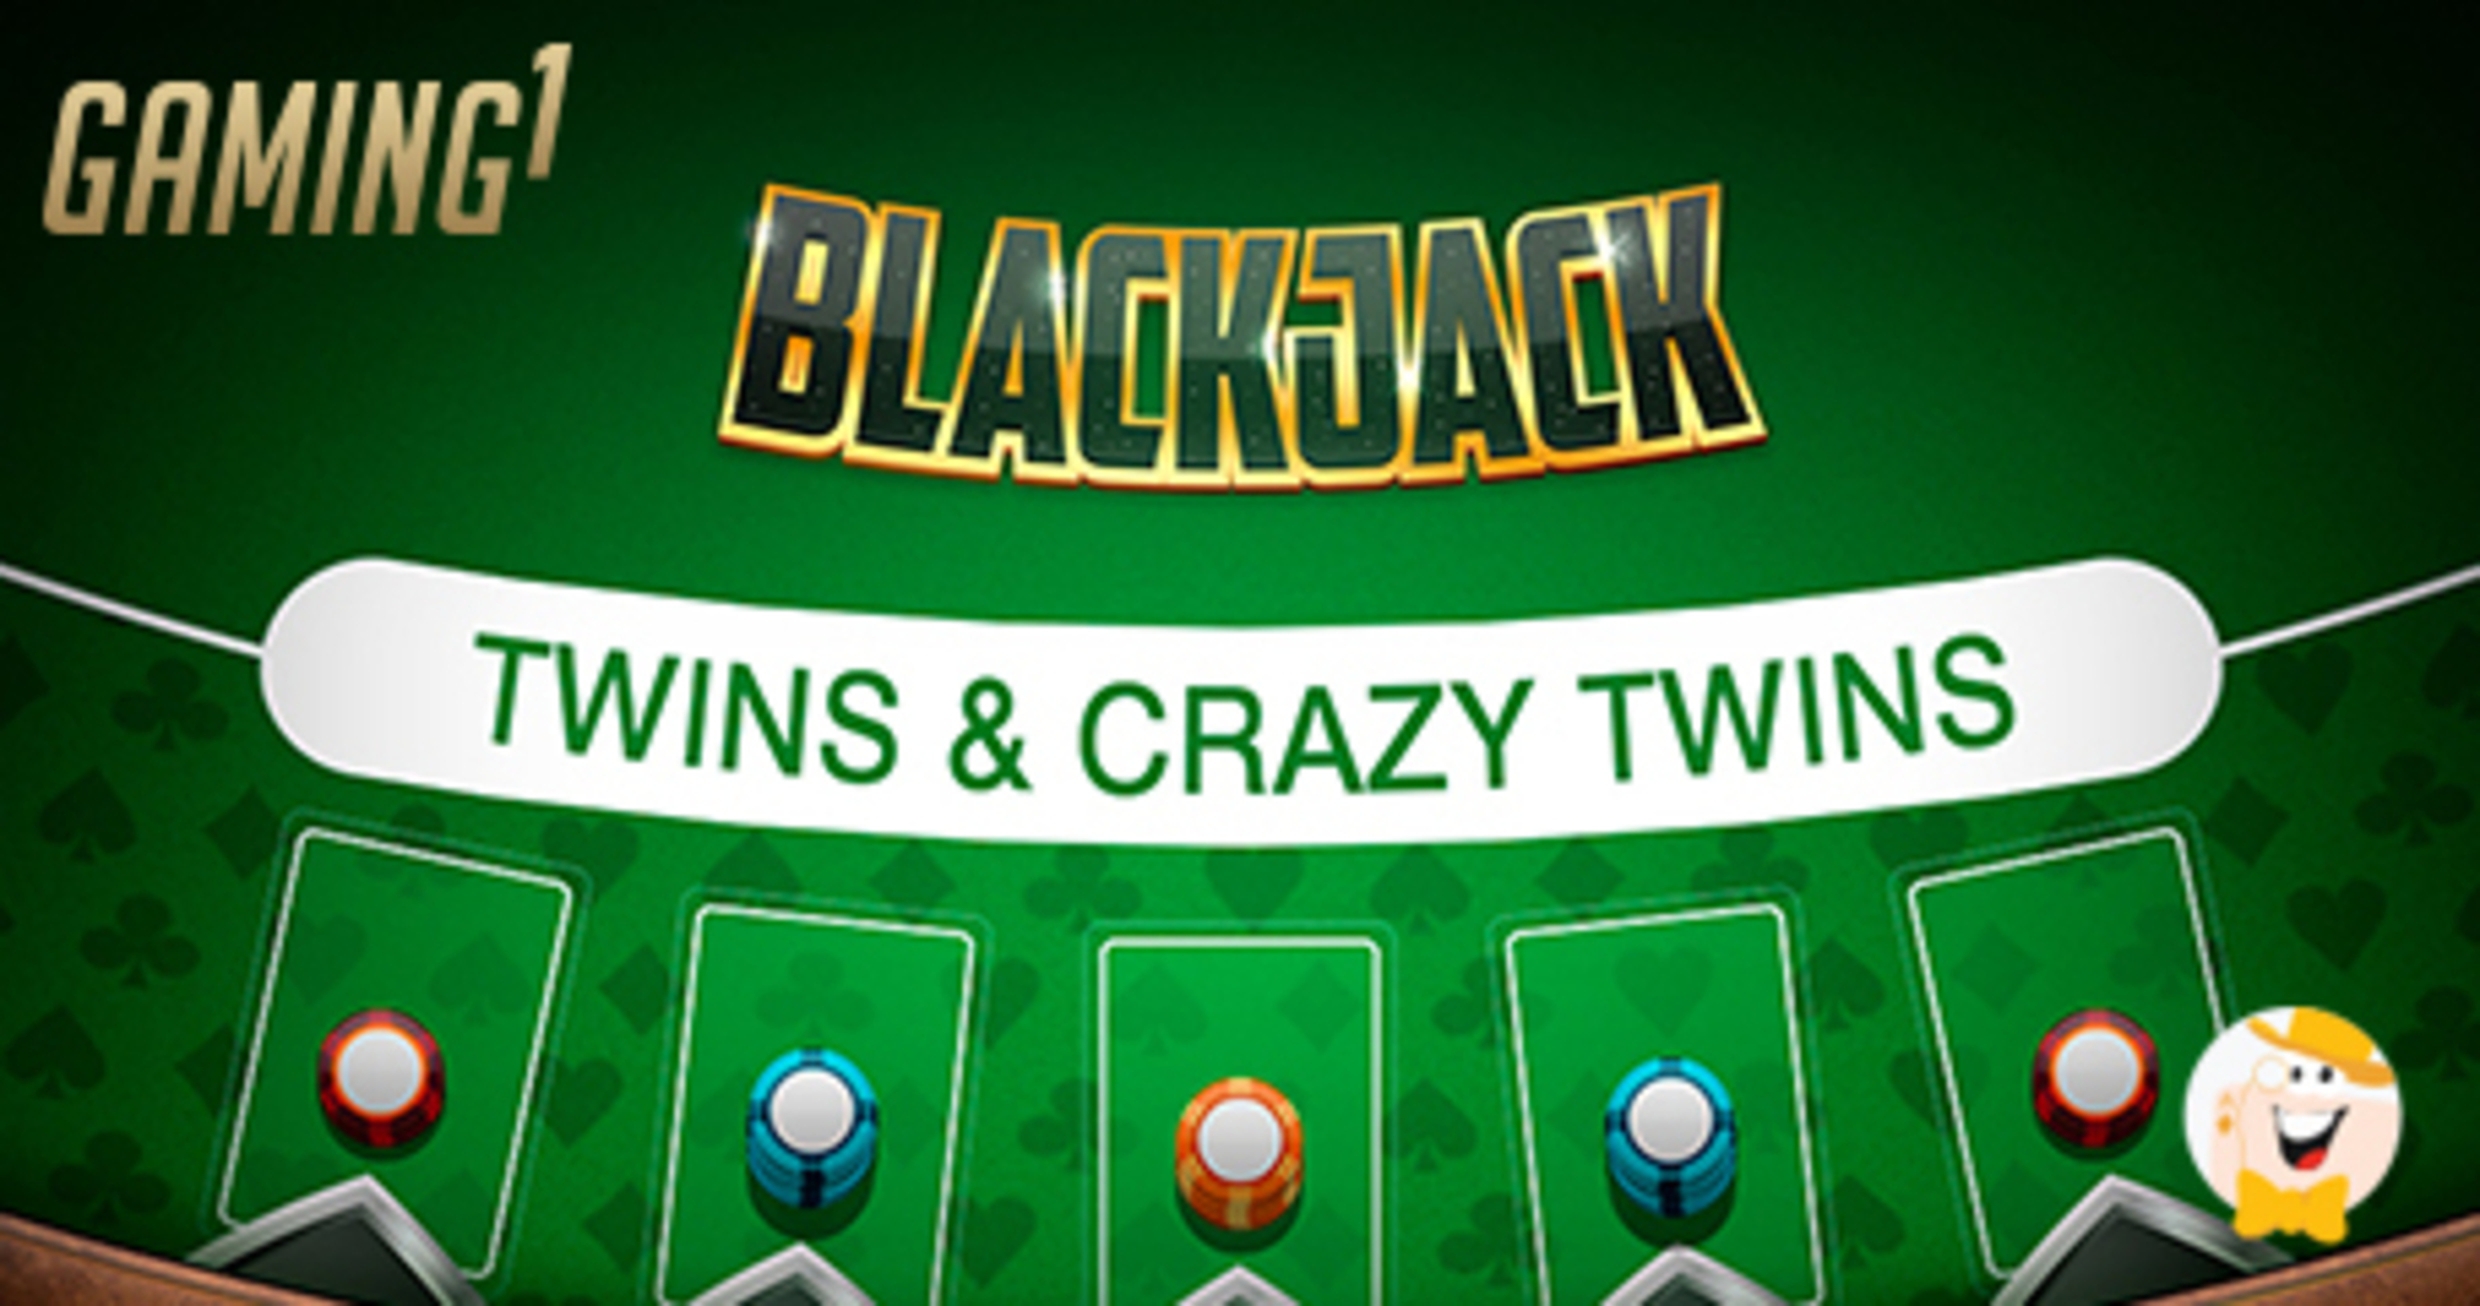 BlackJack Twins and Crazy Twins demo